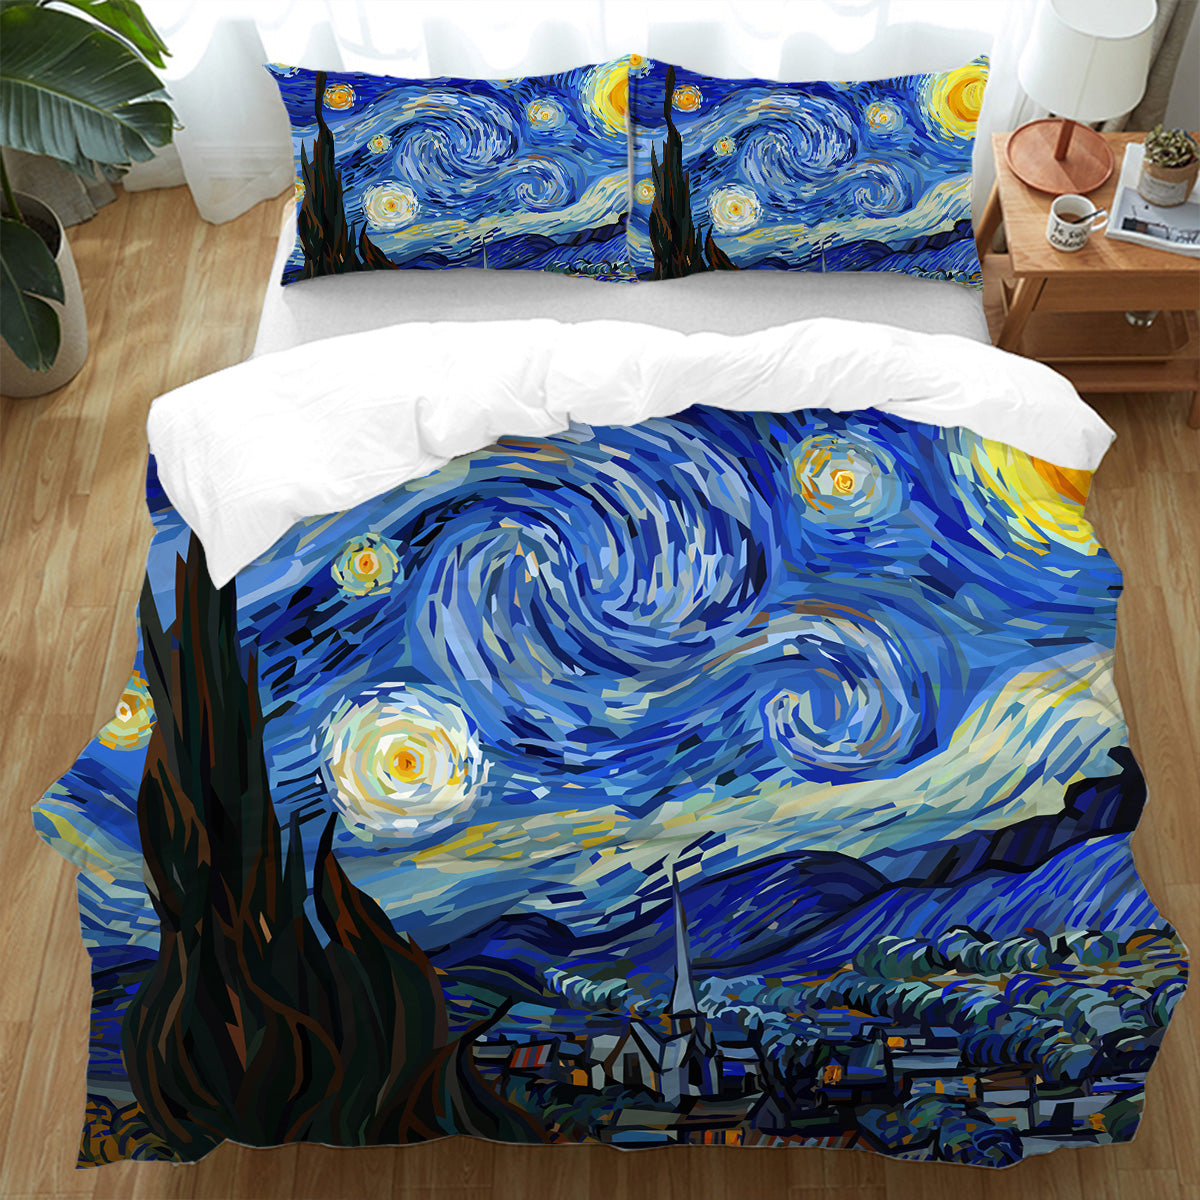 Van Gogh's The Starry Night Bedding Set